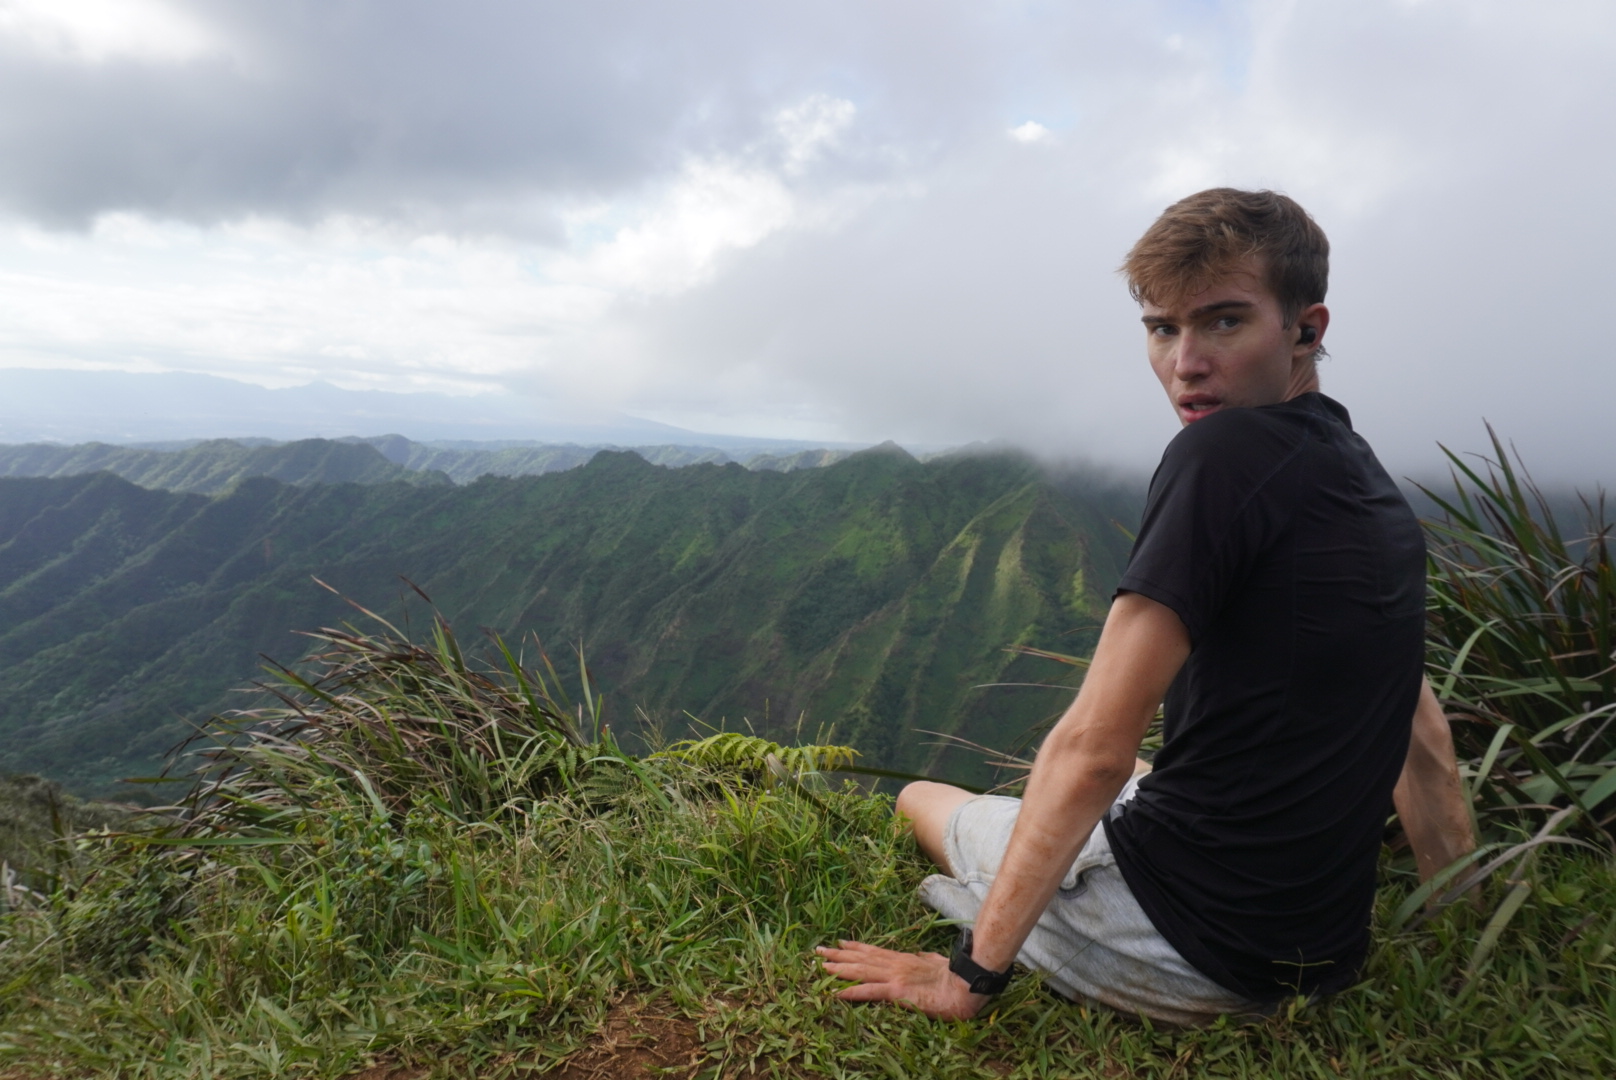 On top of a mountain on Oahu, noah is happy he chose to do this Oahu solo hike.